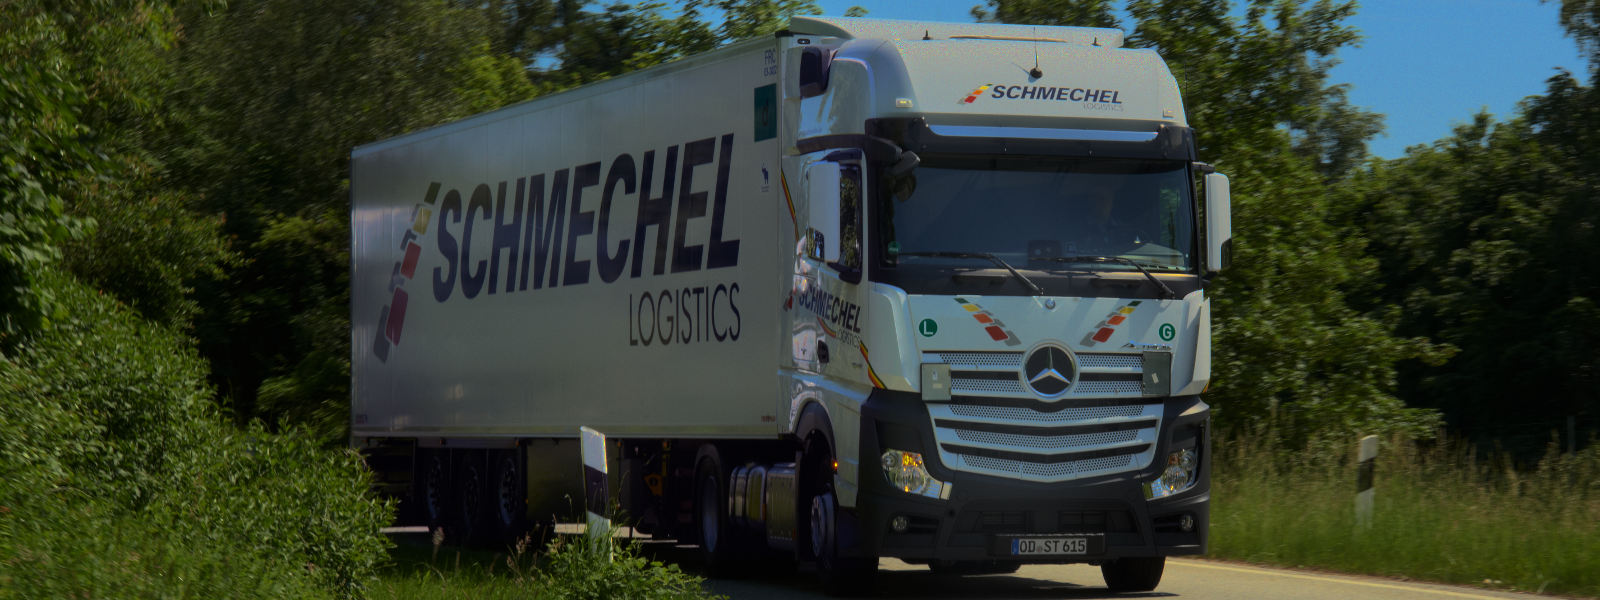 Schmechel Transport GmbH - Your competent Partner for Pharma